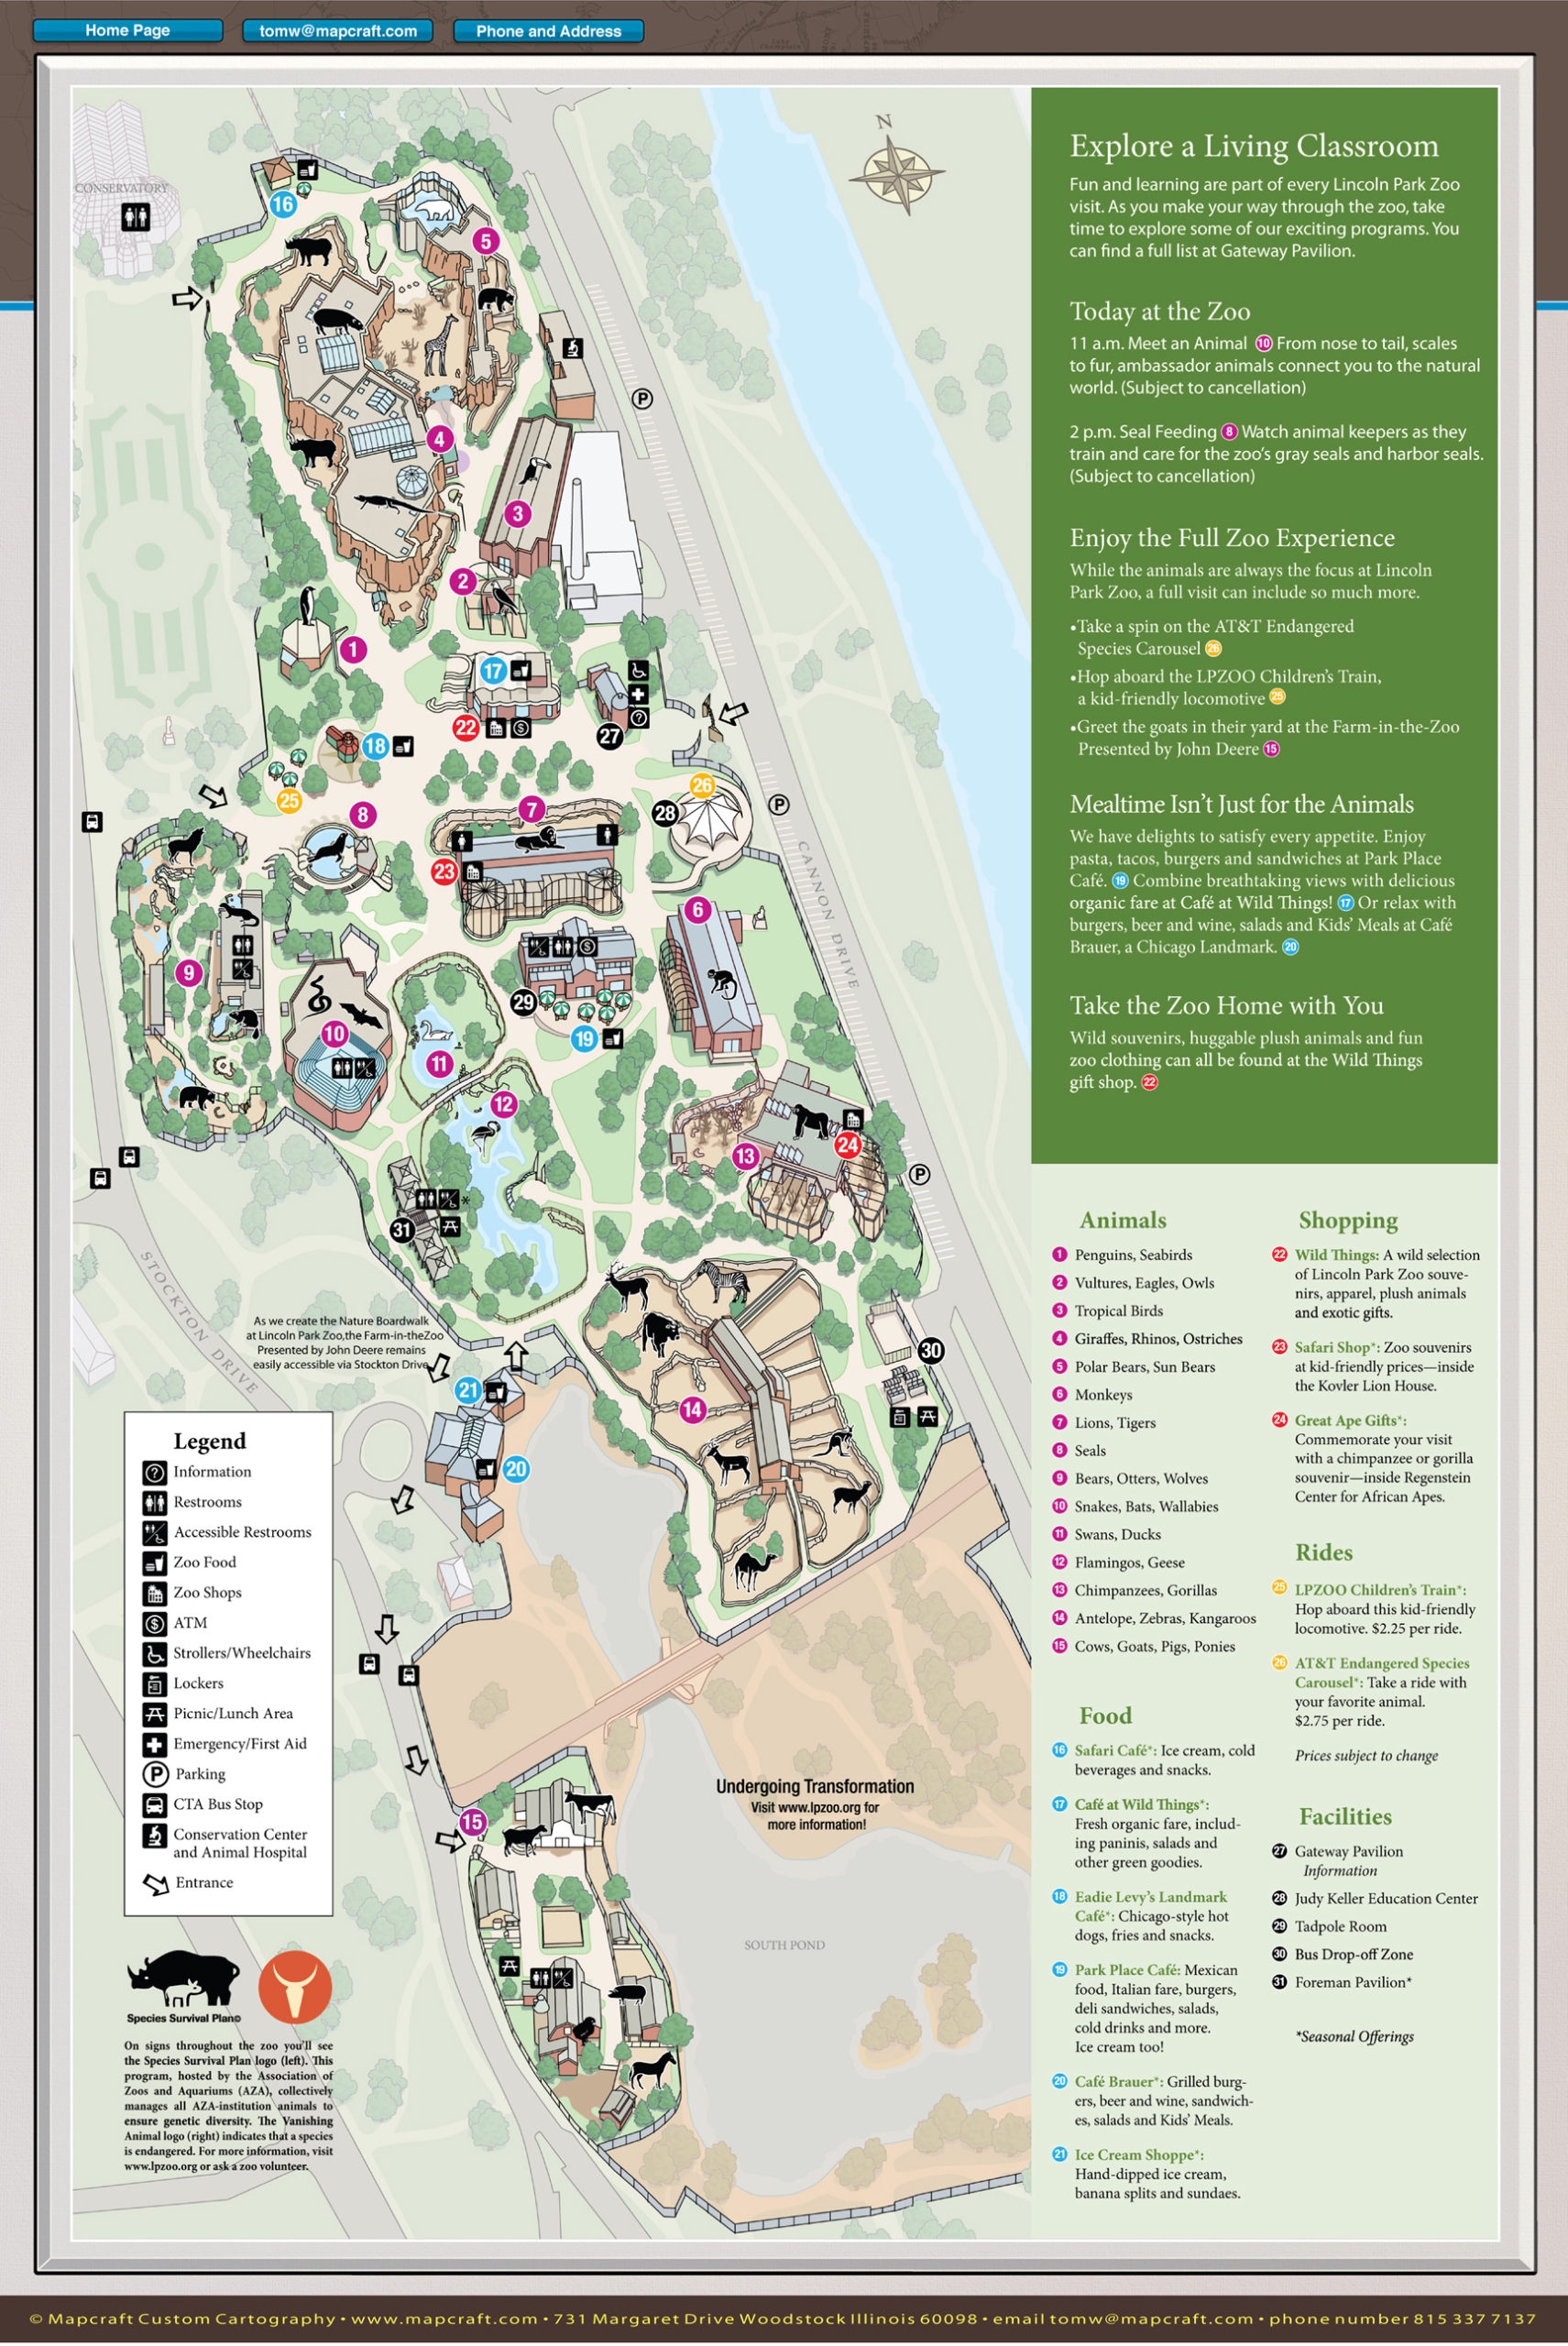 Mapcraft Custom Cartography Lincoln Park Zoo